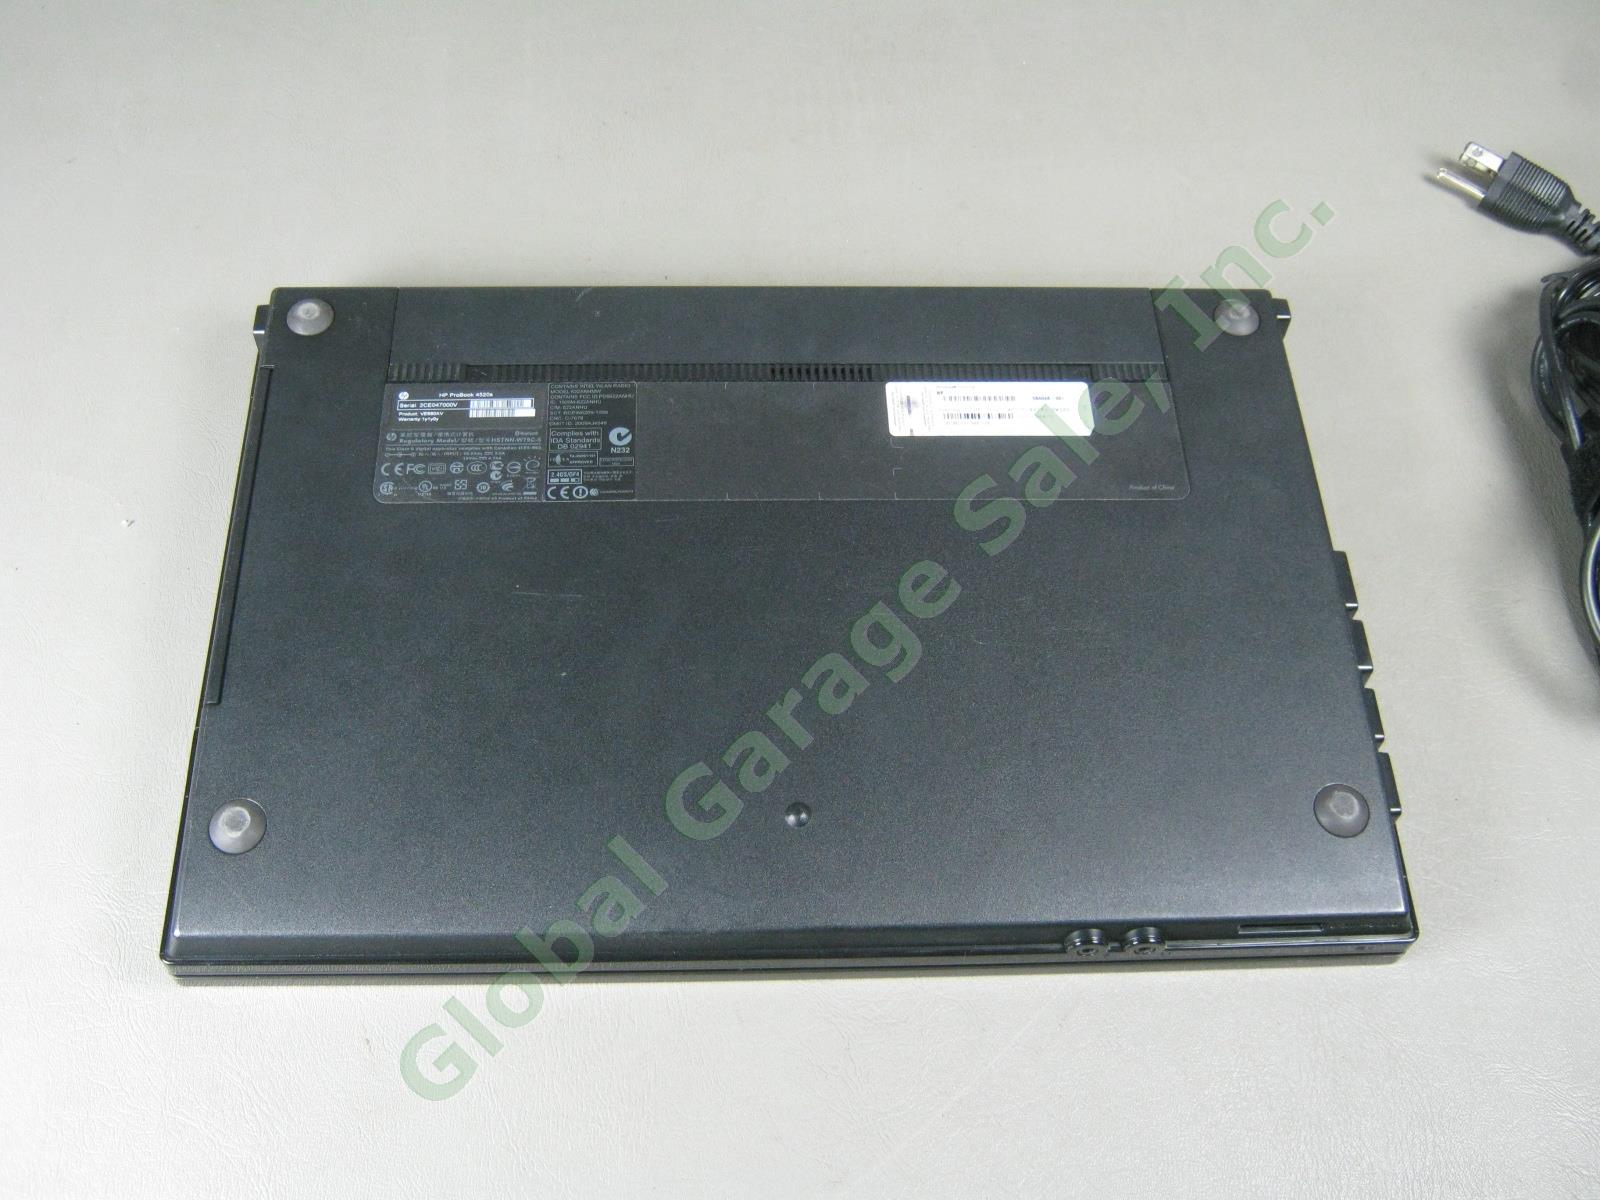 HP 4520s ProBook Laptop Computer Intel Core i5 M520 2.40GHz 4GB Windows 7 Pro NR 6